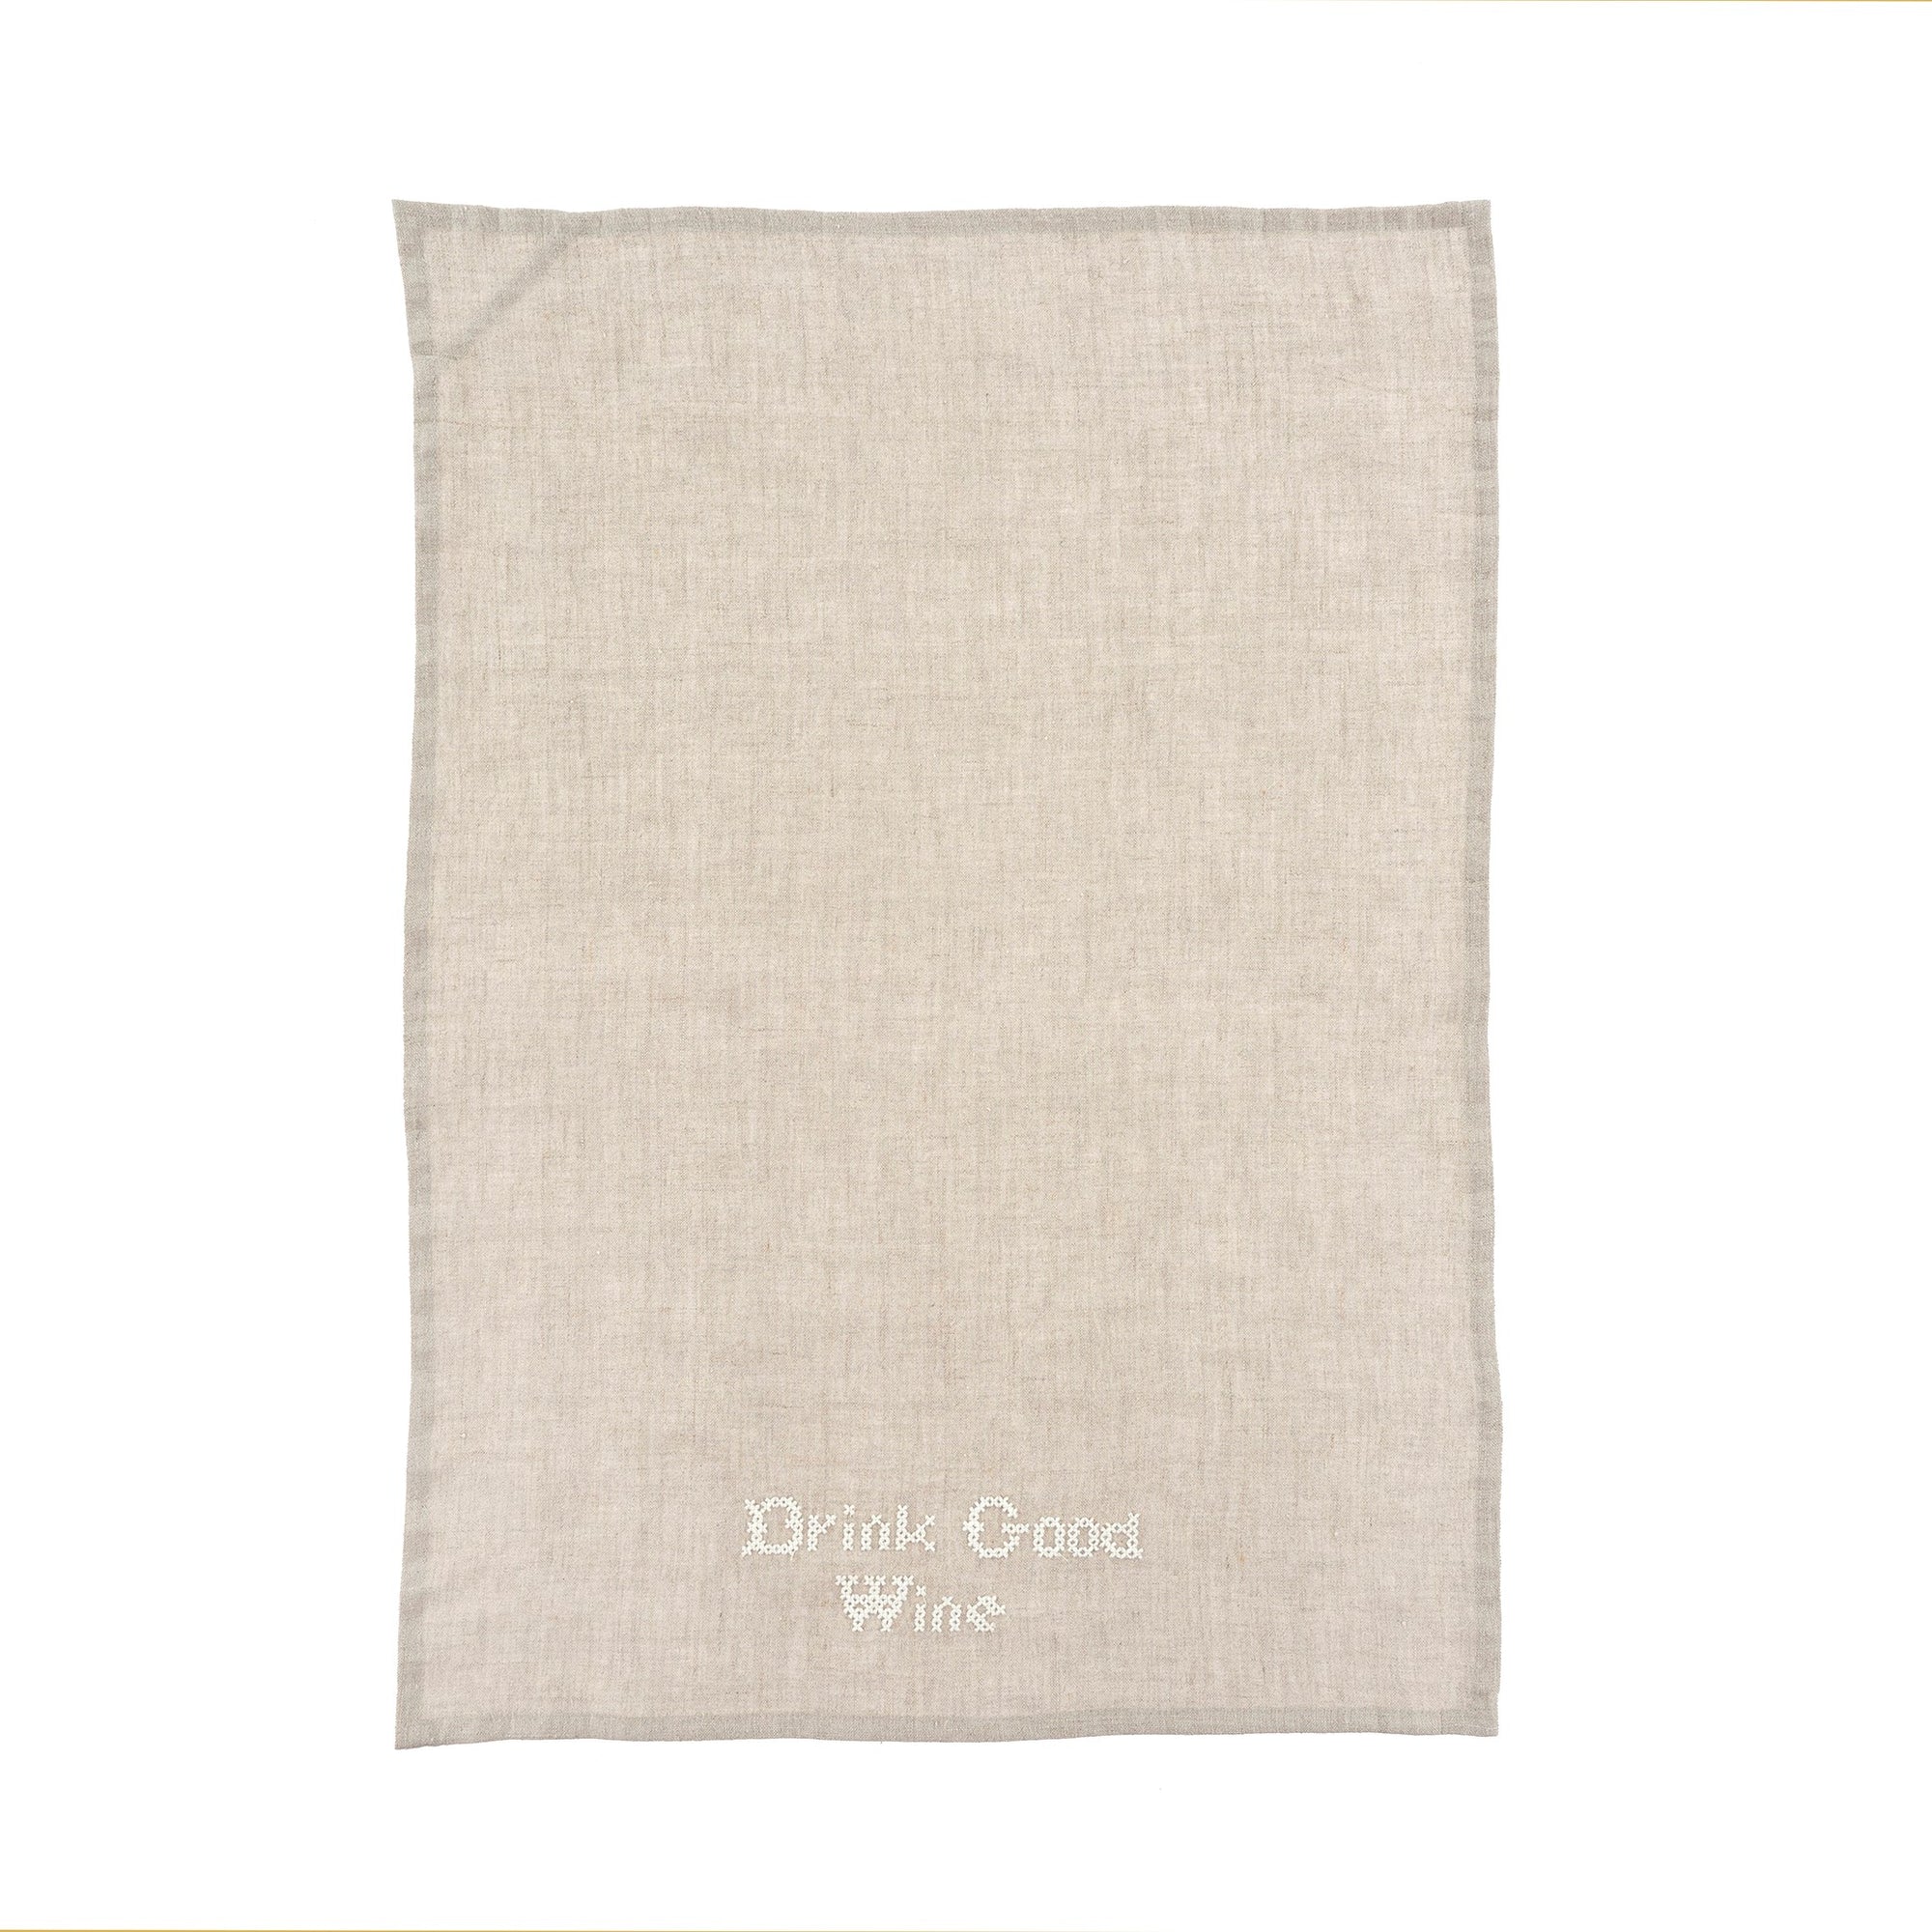 Drink Good Wine - Linen Embroidered Tea Towel